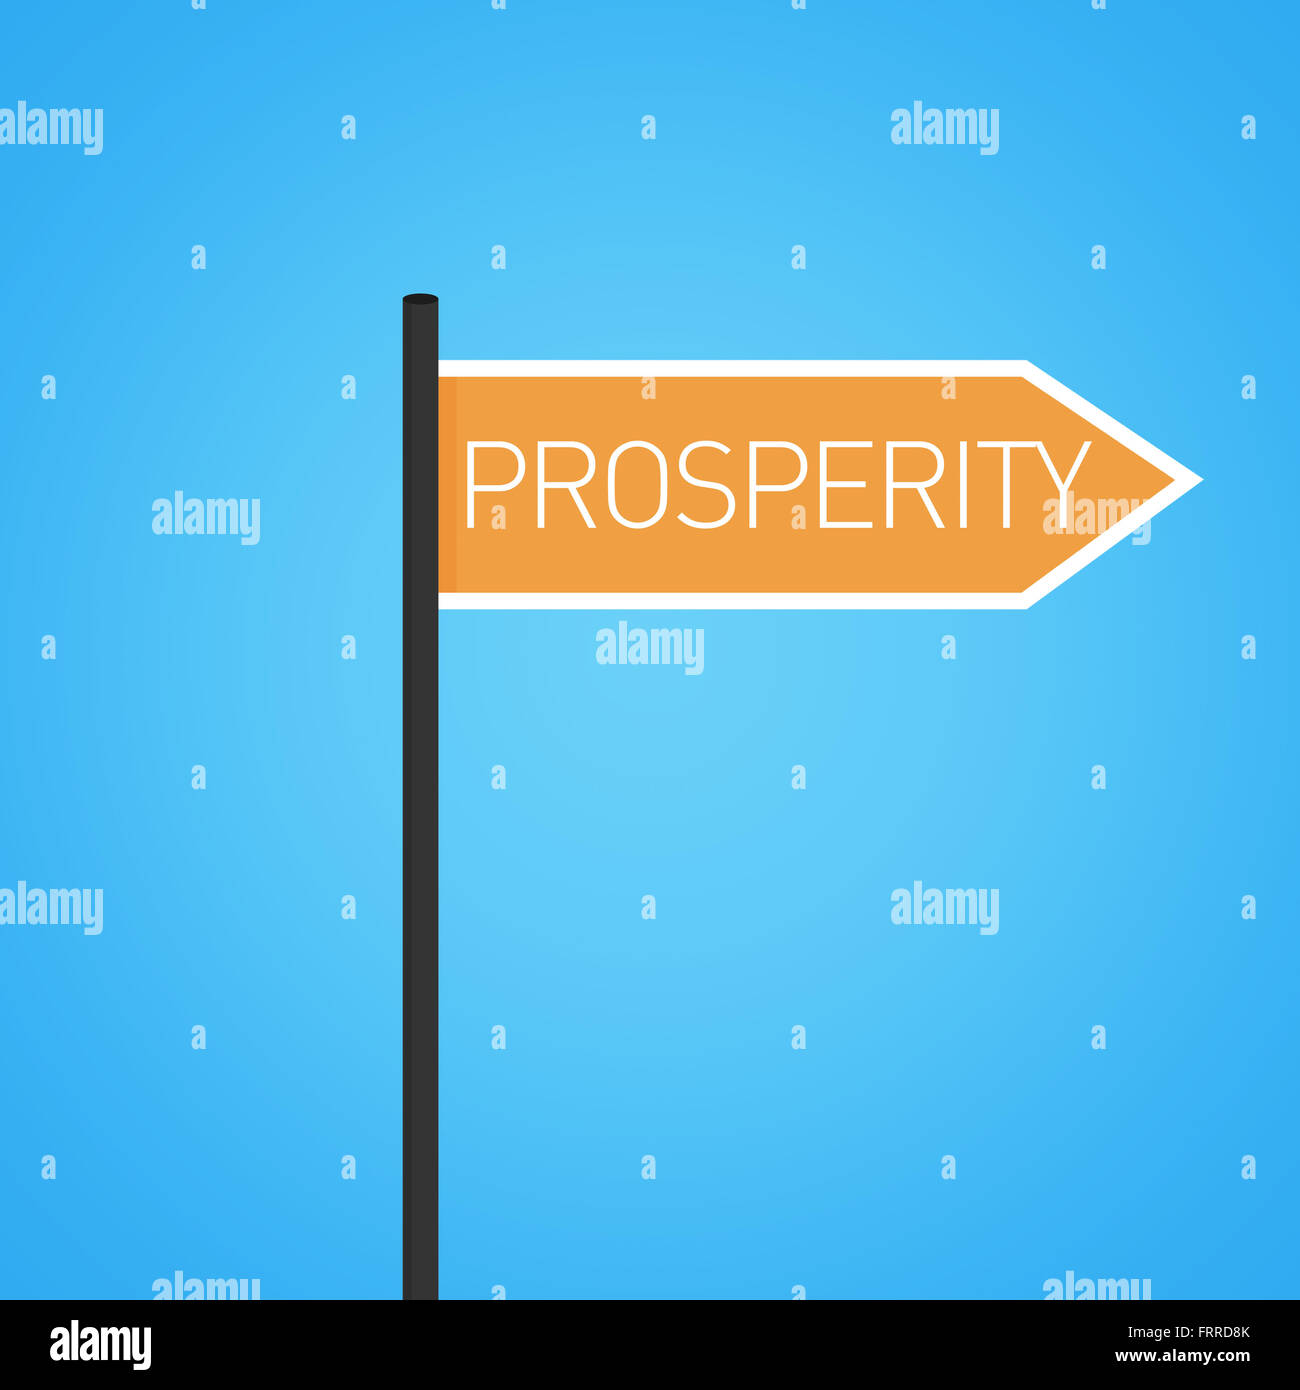 Prosperity nearby, orange road sign concept, flat design Stock Photo